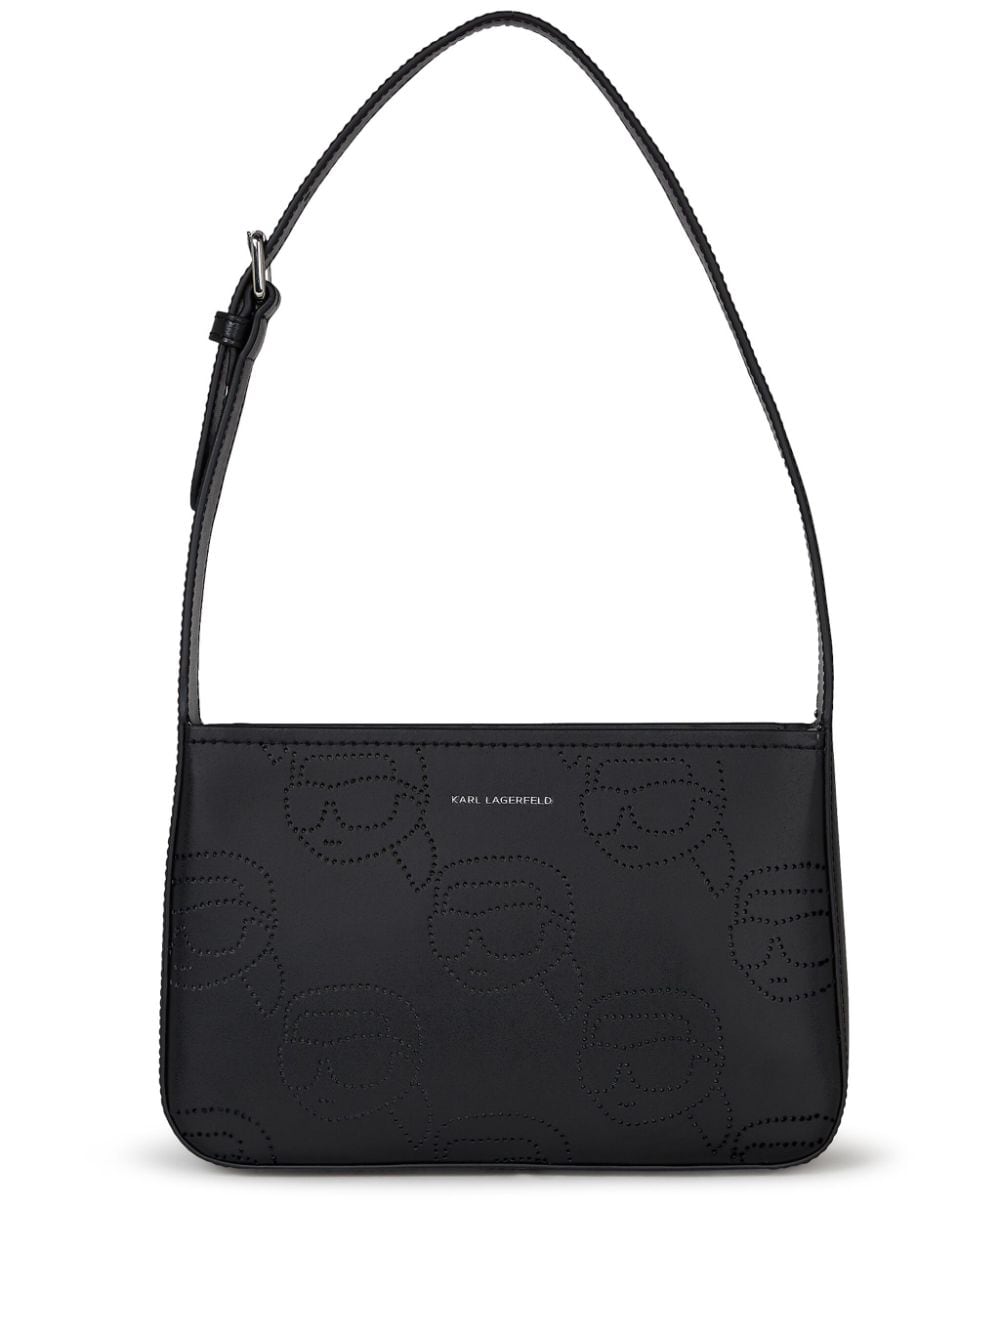 Karl Lagerfeld Ikonik Perforated Leather Shoulder Bag In Black